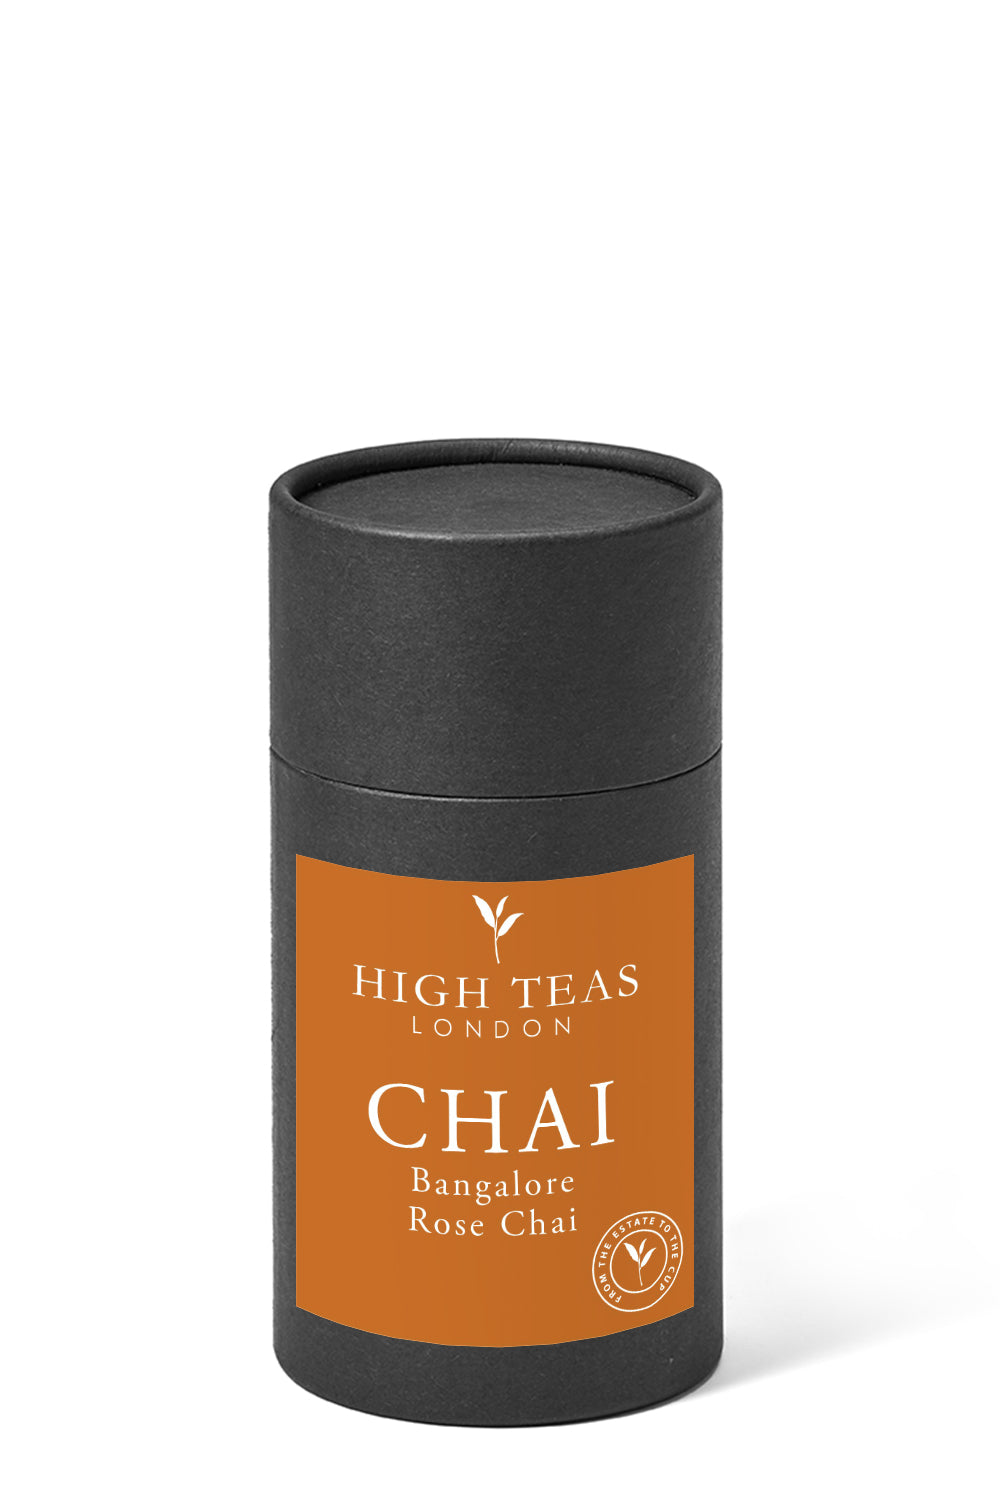 Bangalore Rose Chai-60g gift-Loose Leaf Tea-High Teas